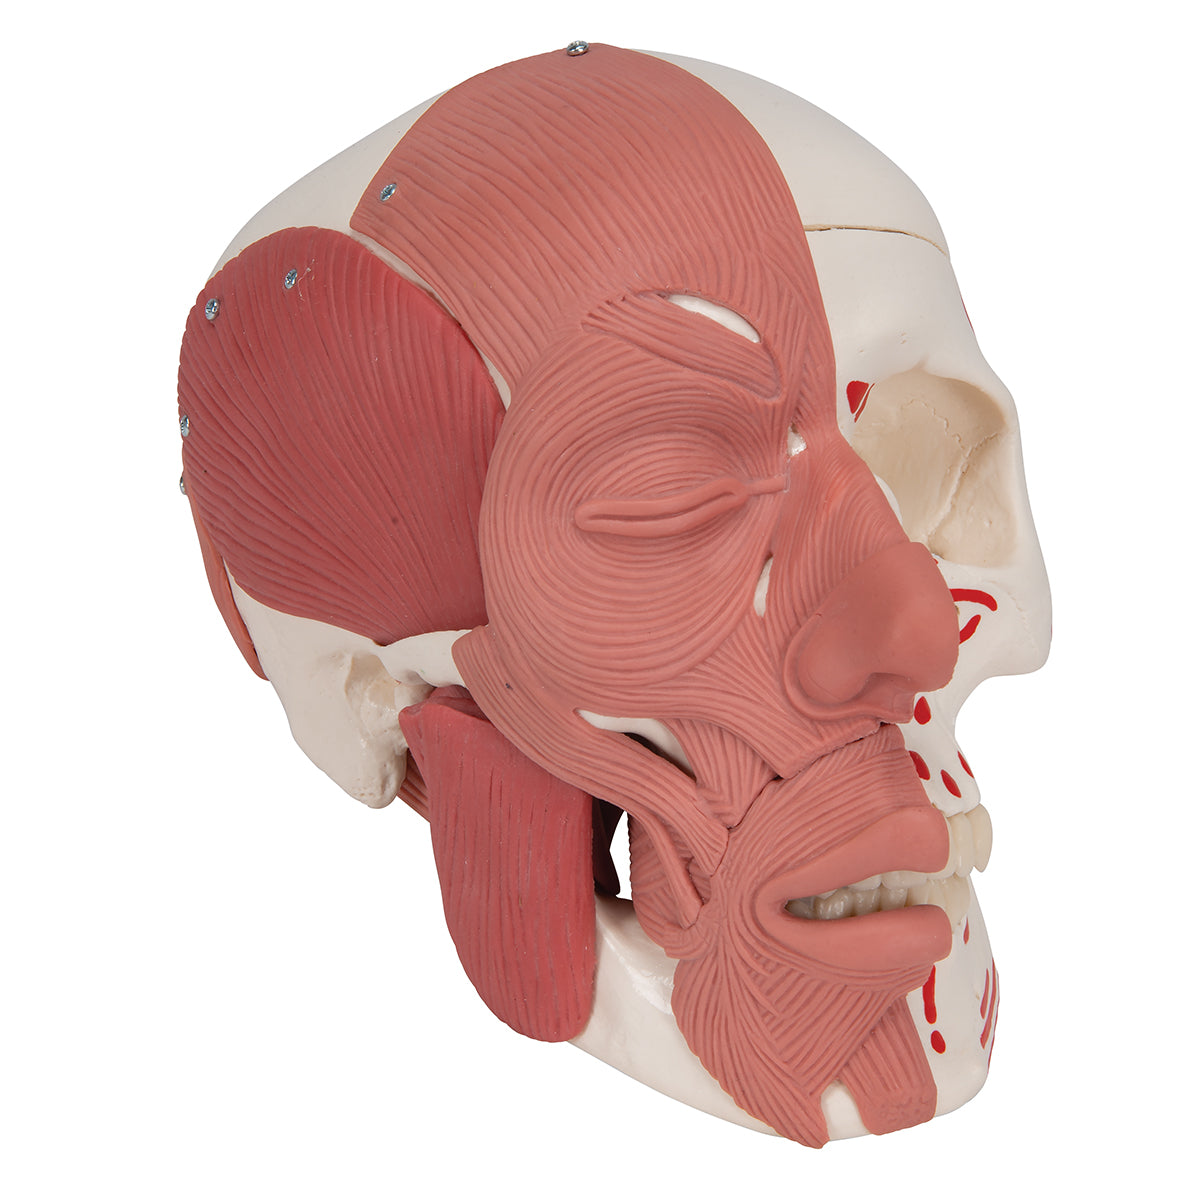 Skallemodell med både tugg- och ansiktsmuskler